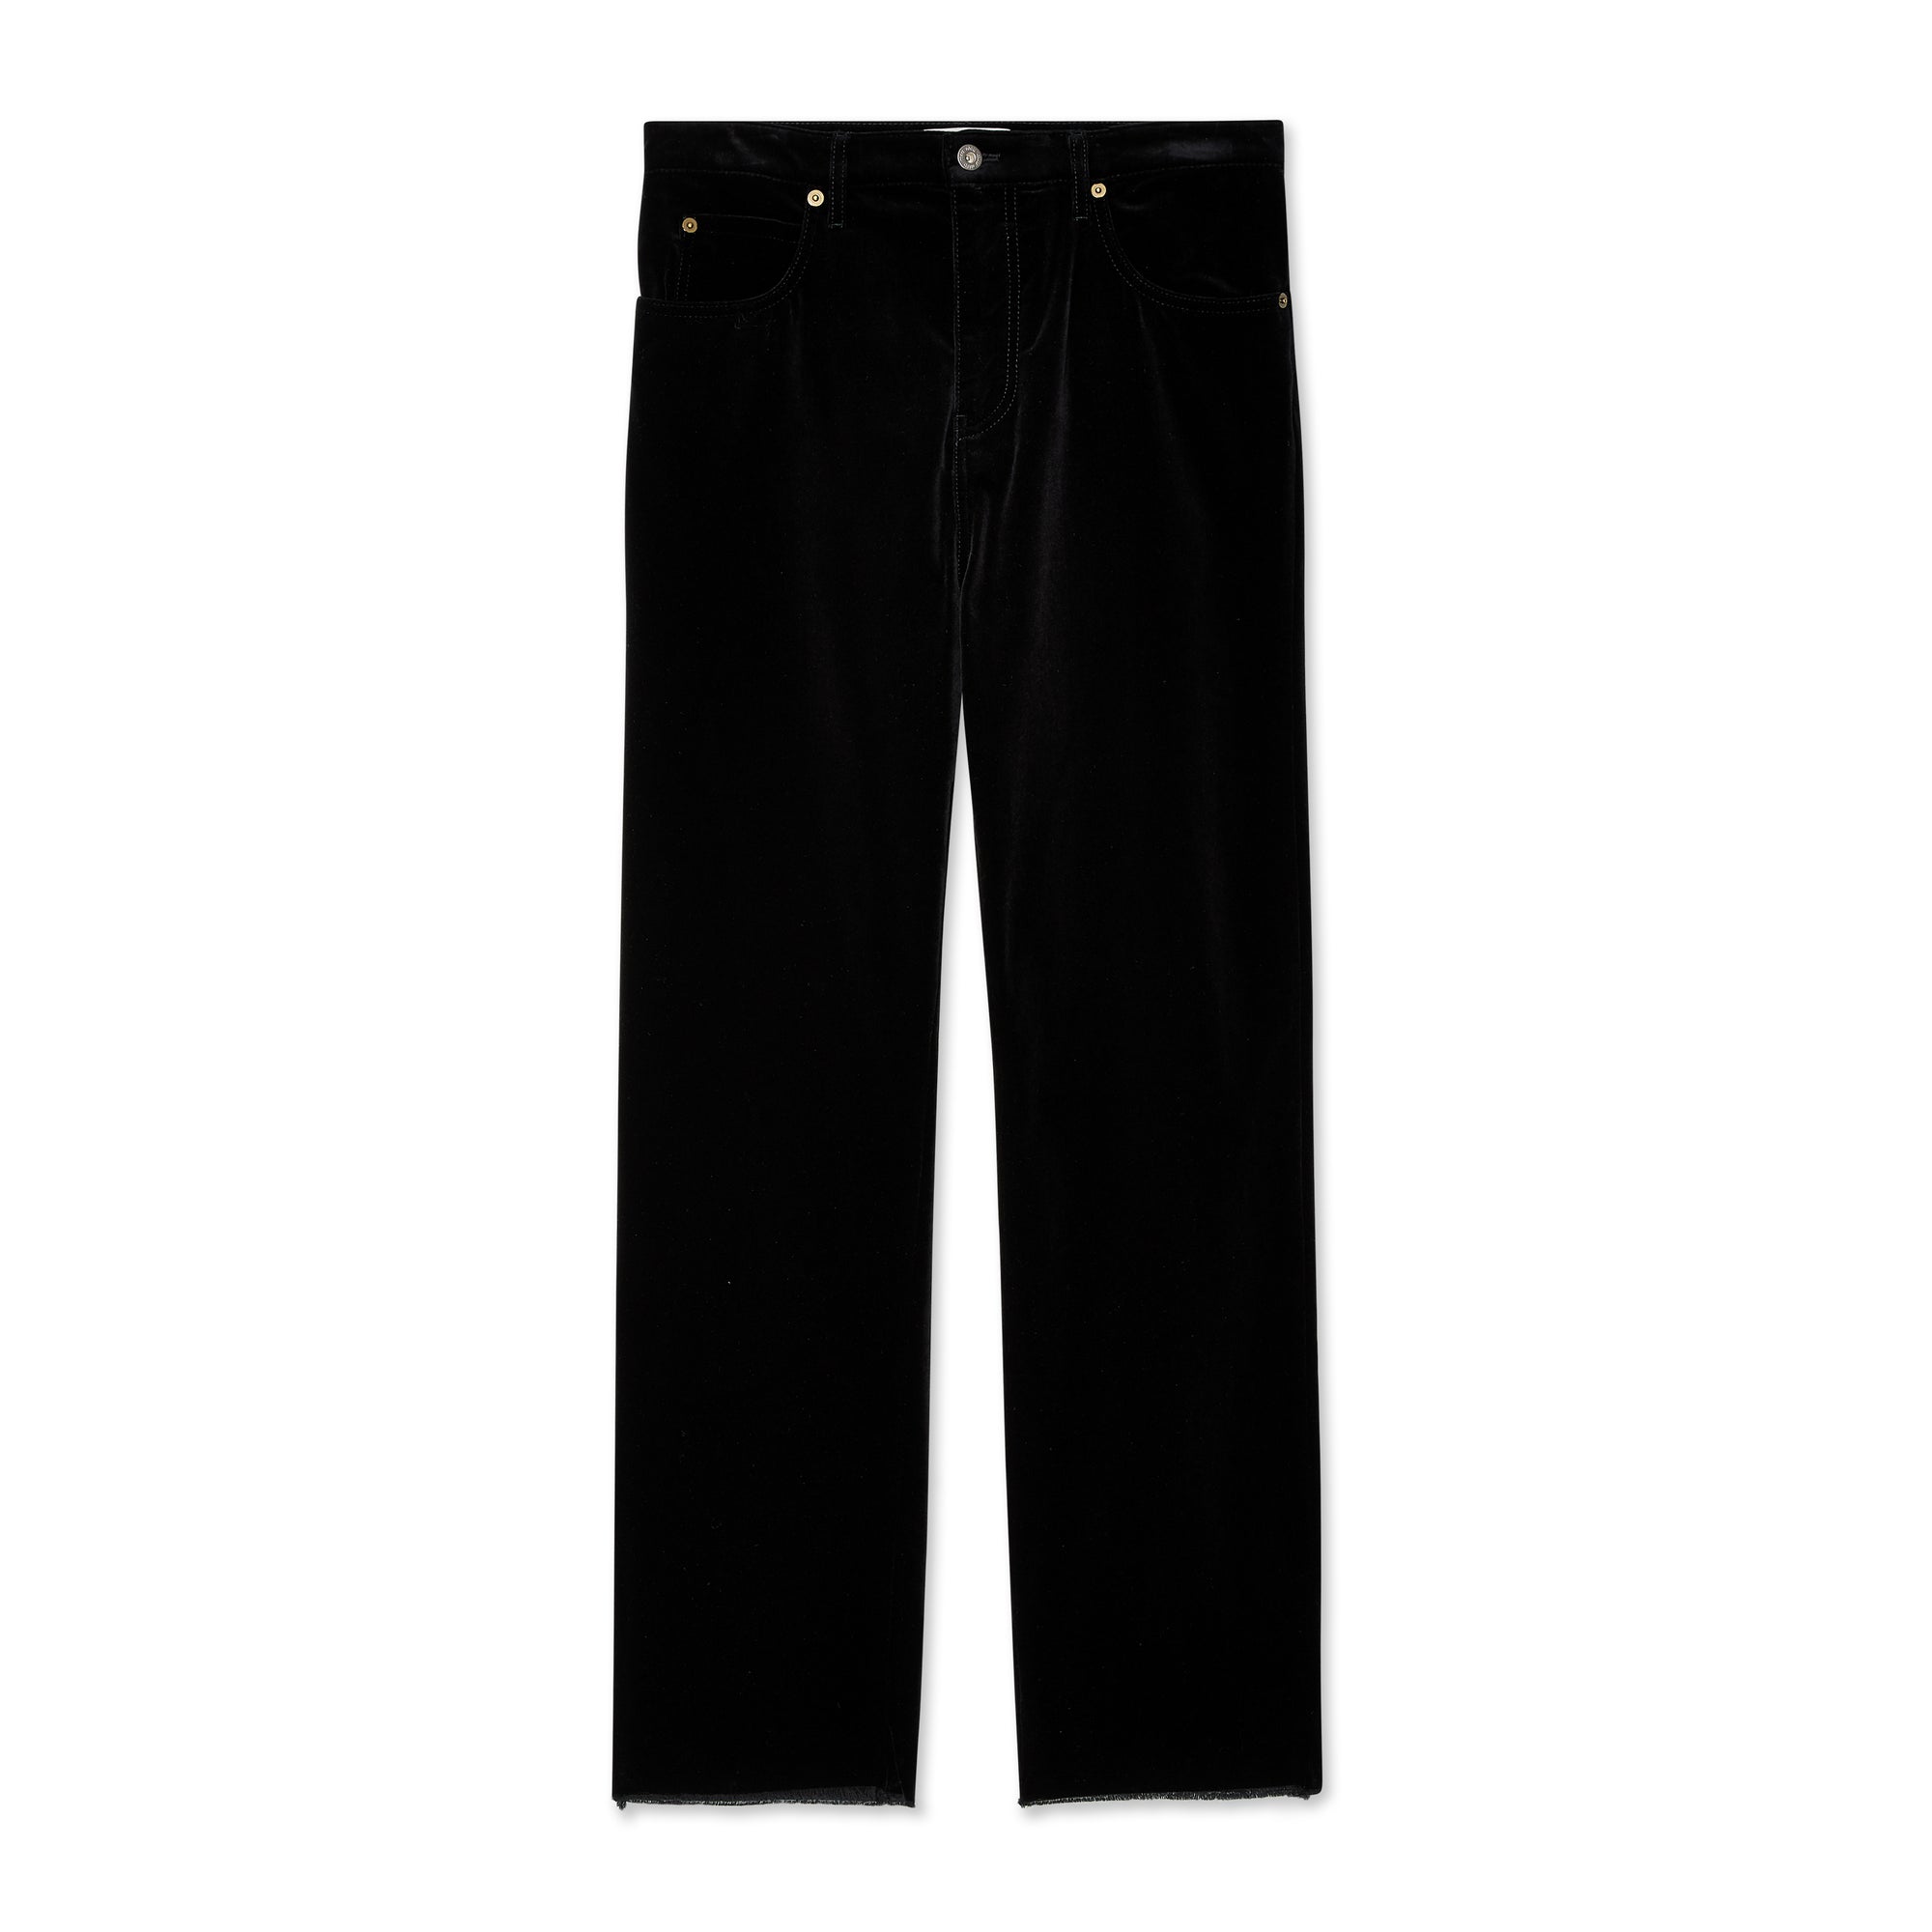 Miu Miu - Women's Washed Velvet Pants - (Black) view 1